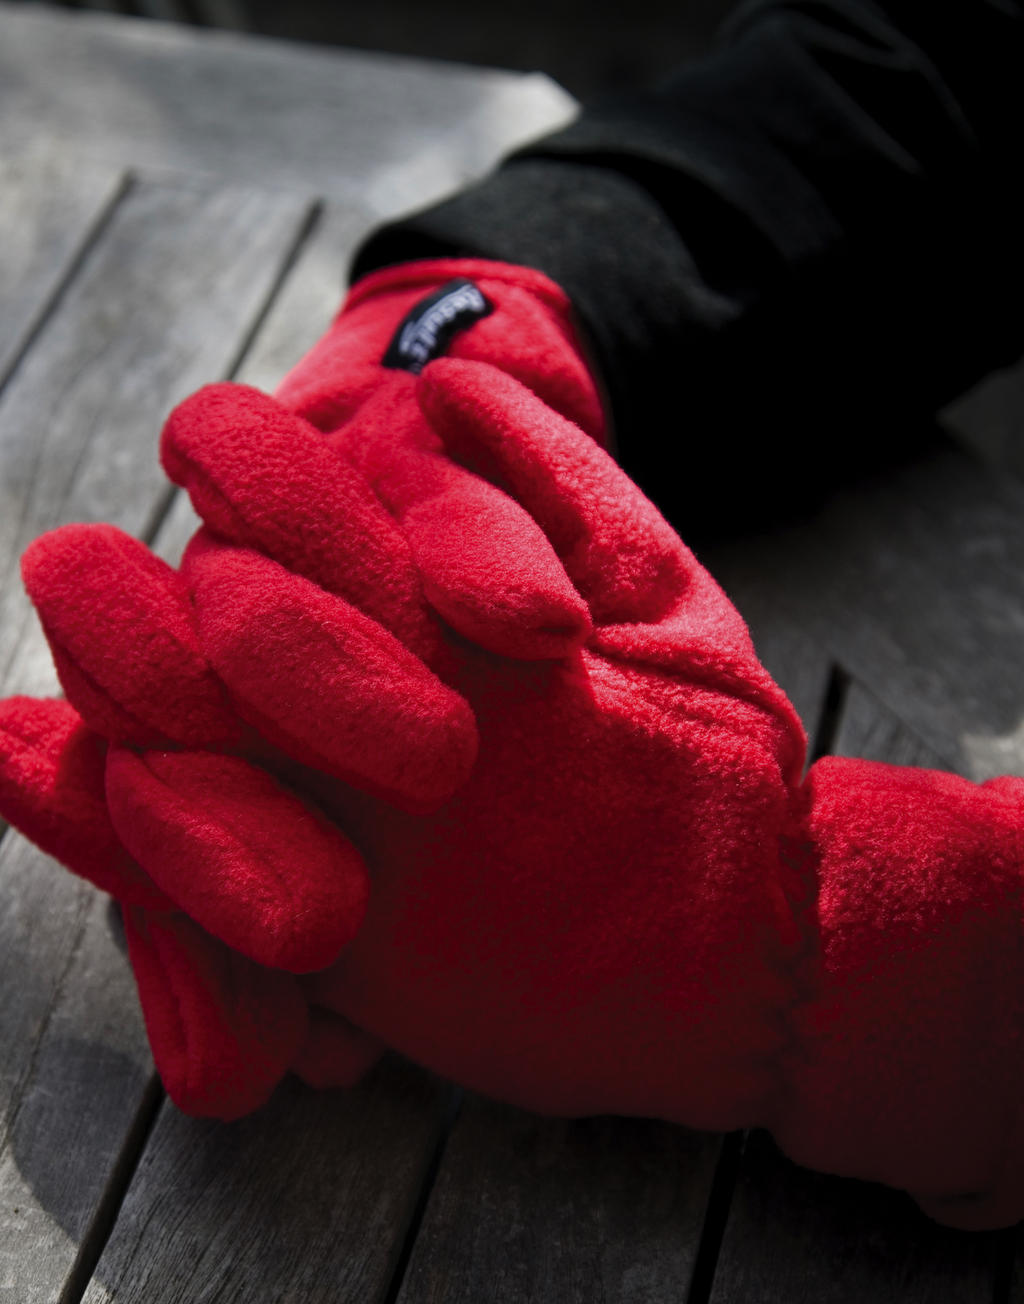 Polartherm™ Gloves